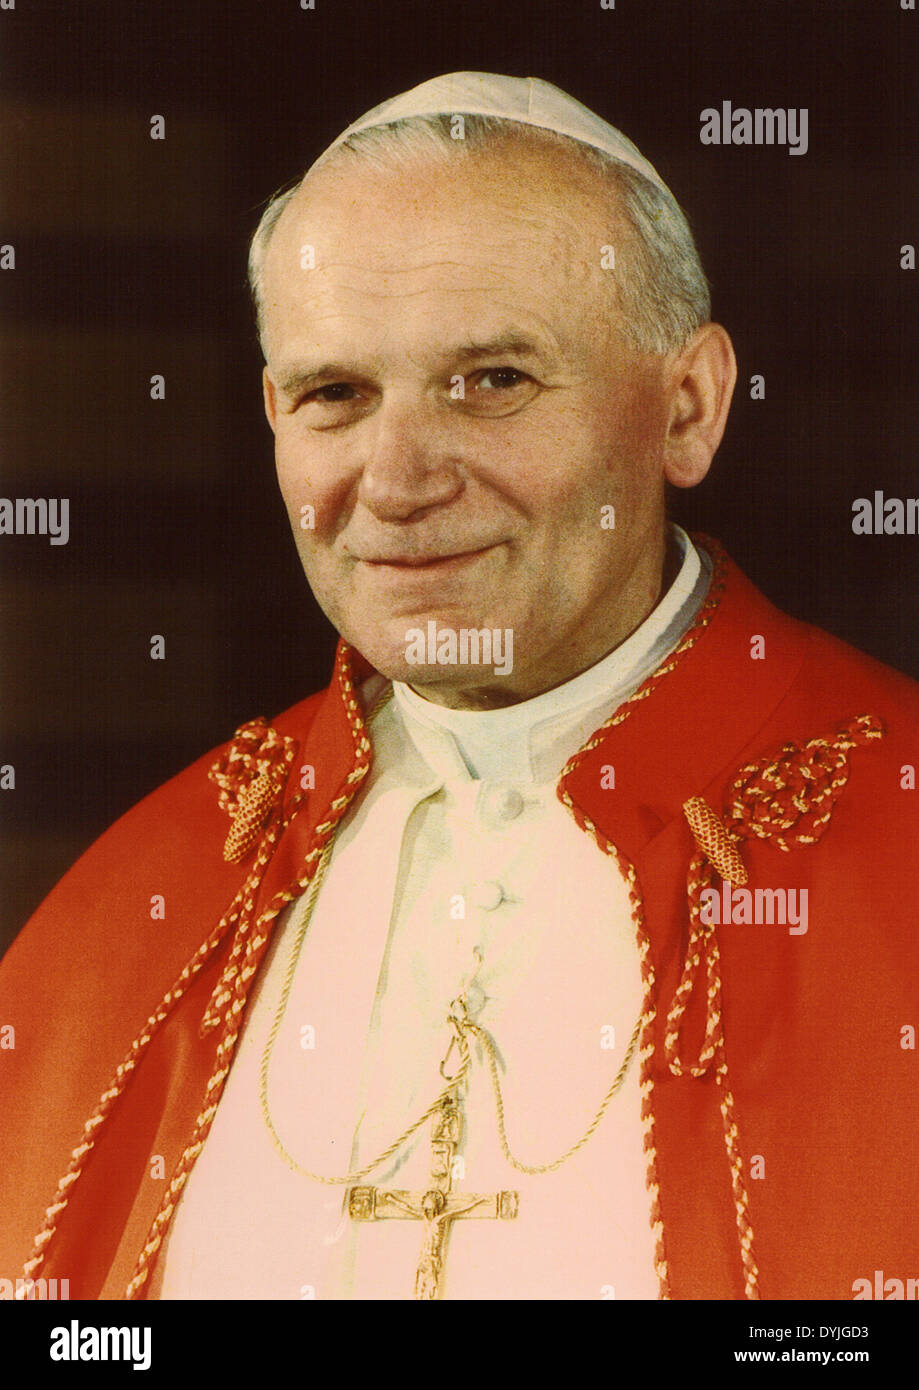 Pope John Paul II Portrait Stock Photo